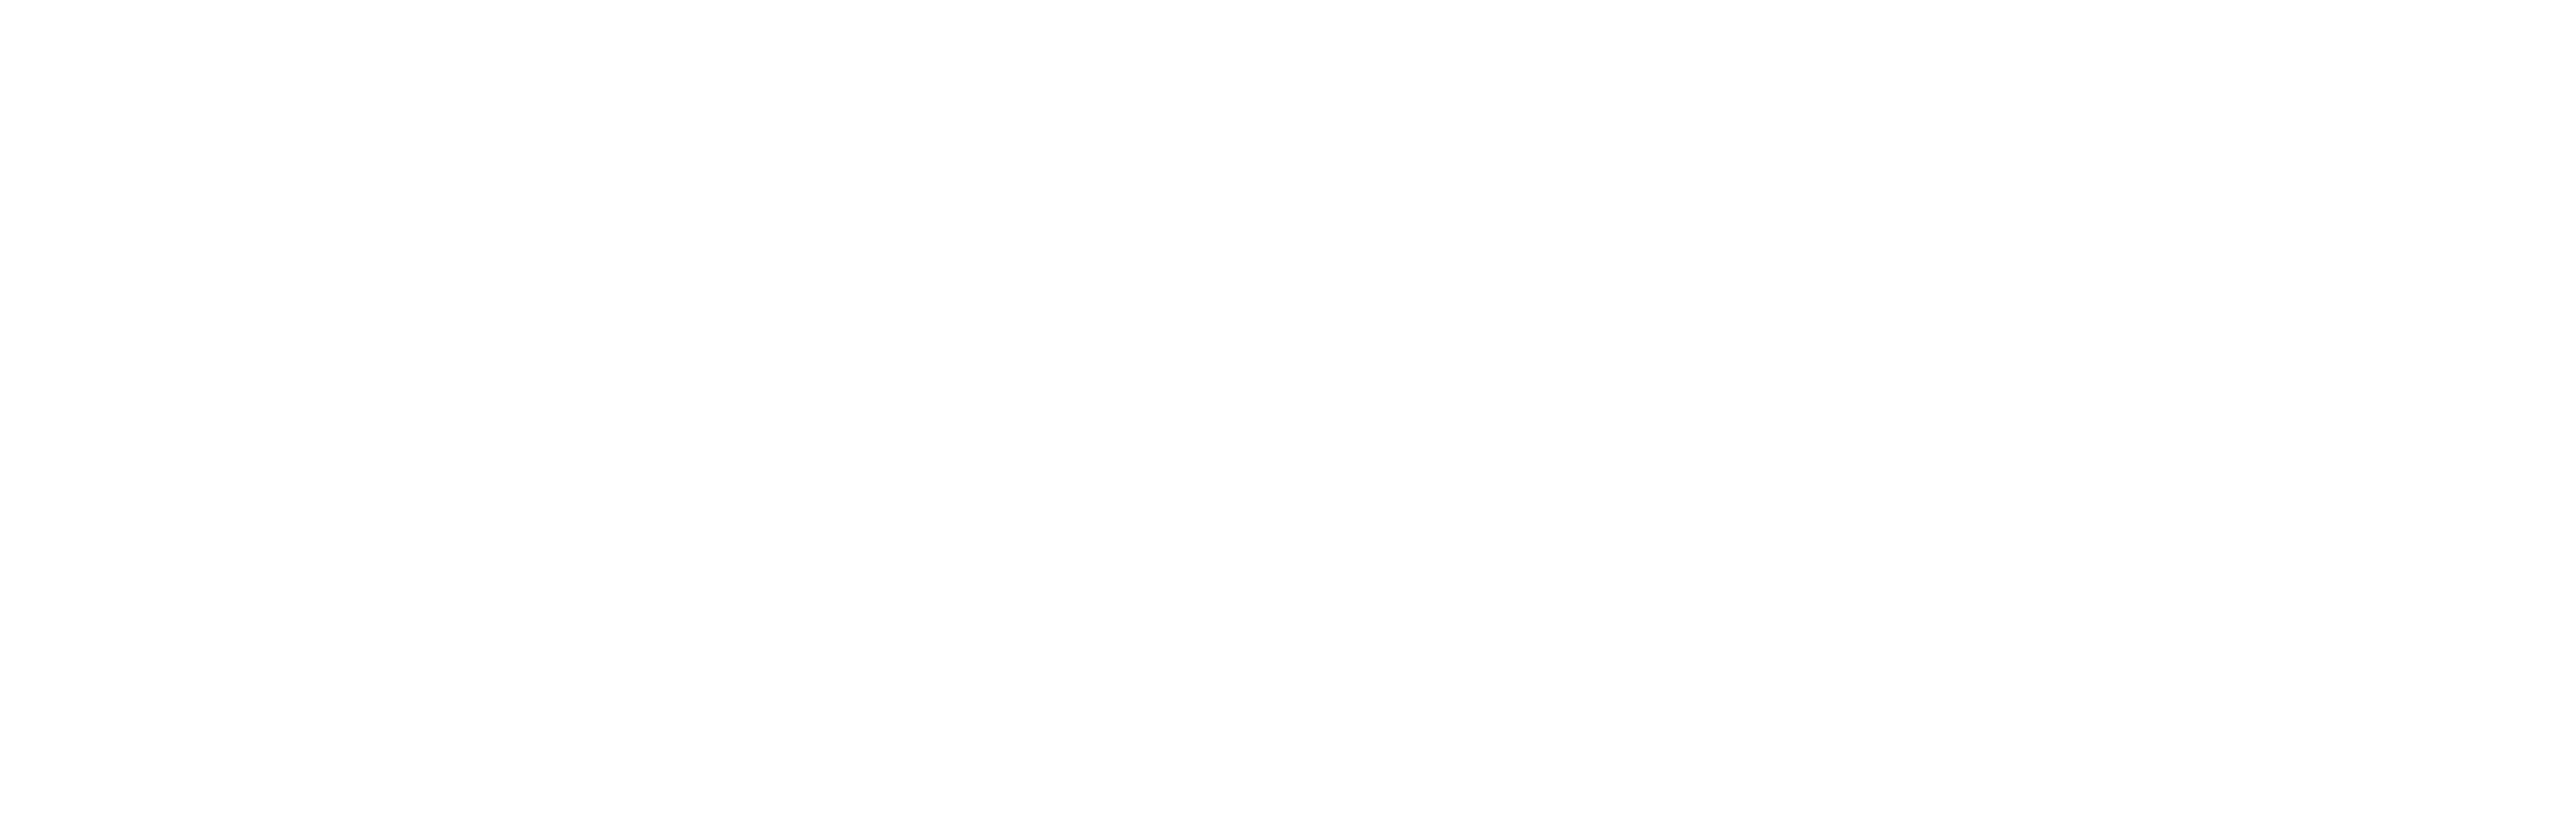 Shelli Kay Creative Logo White